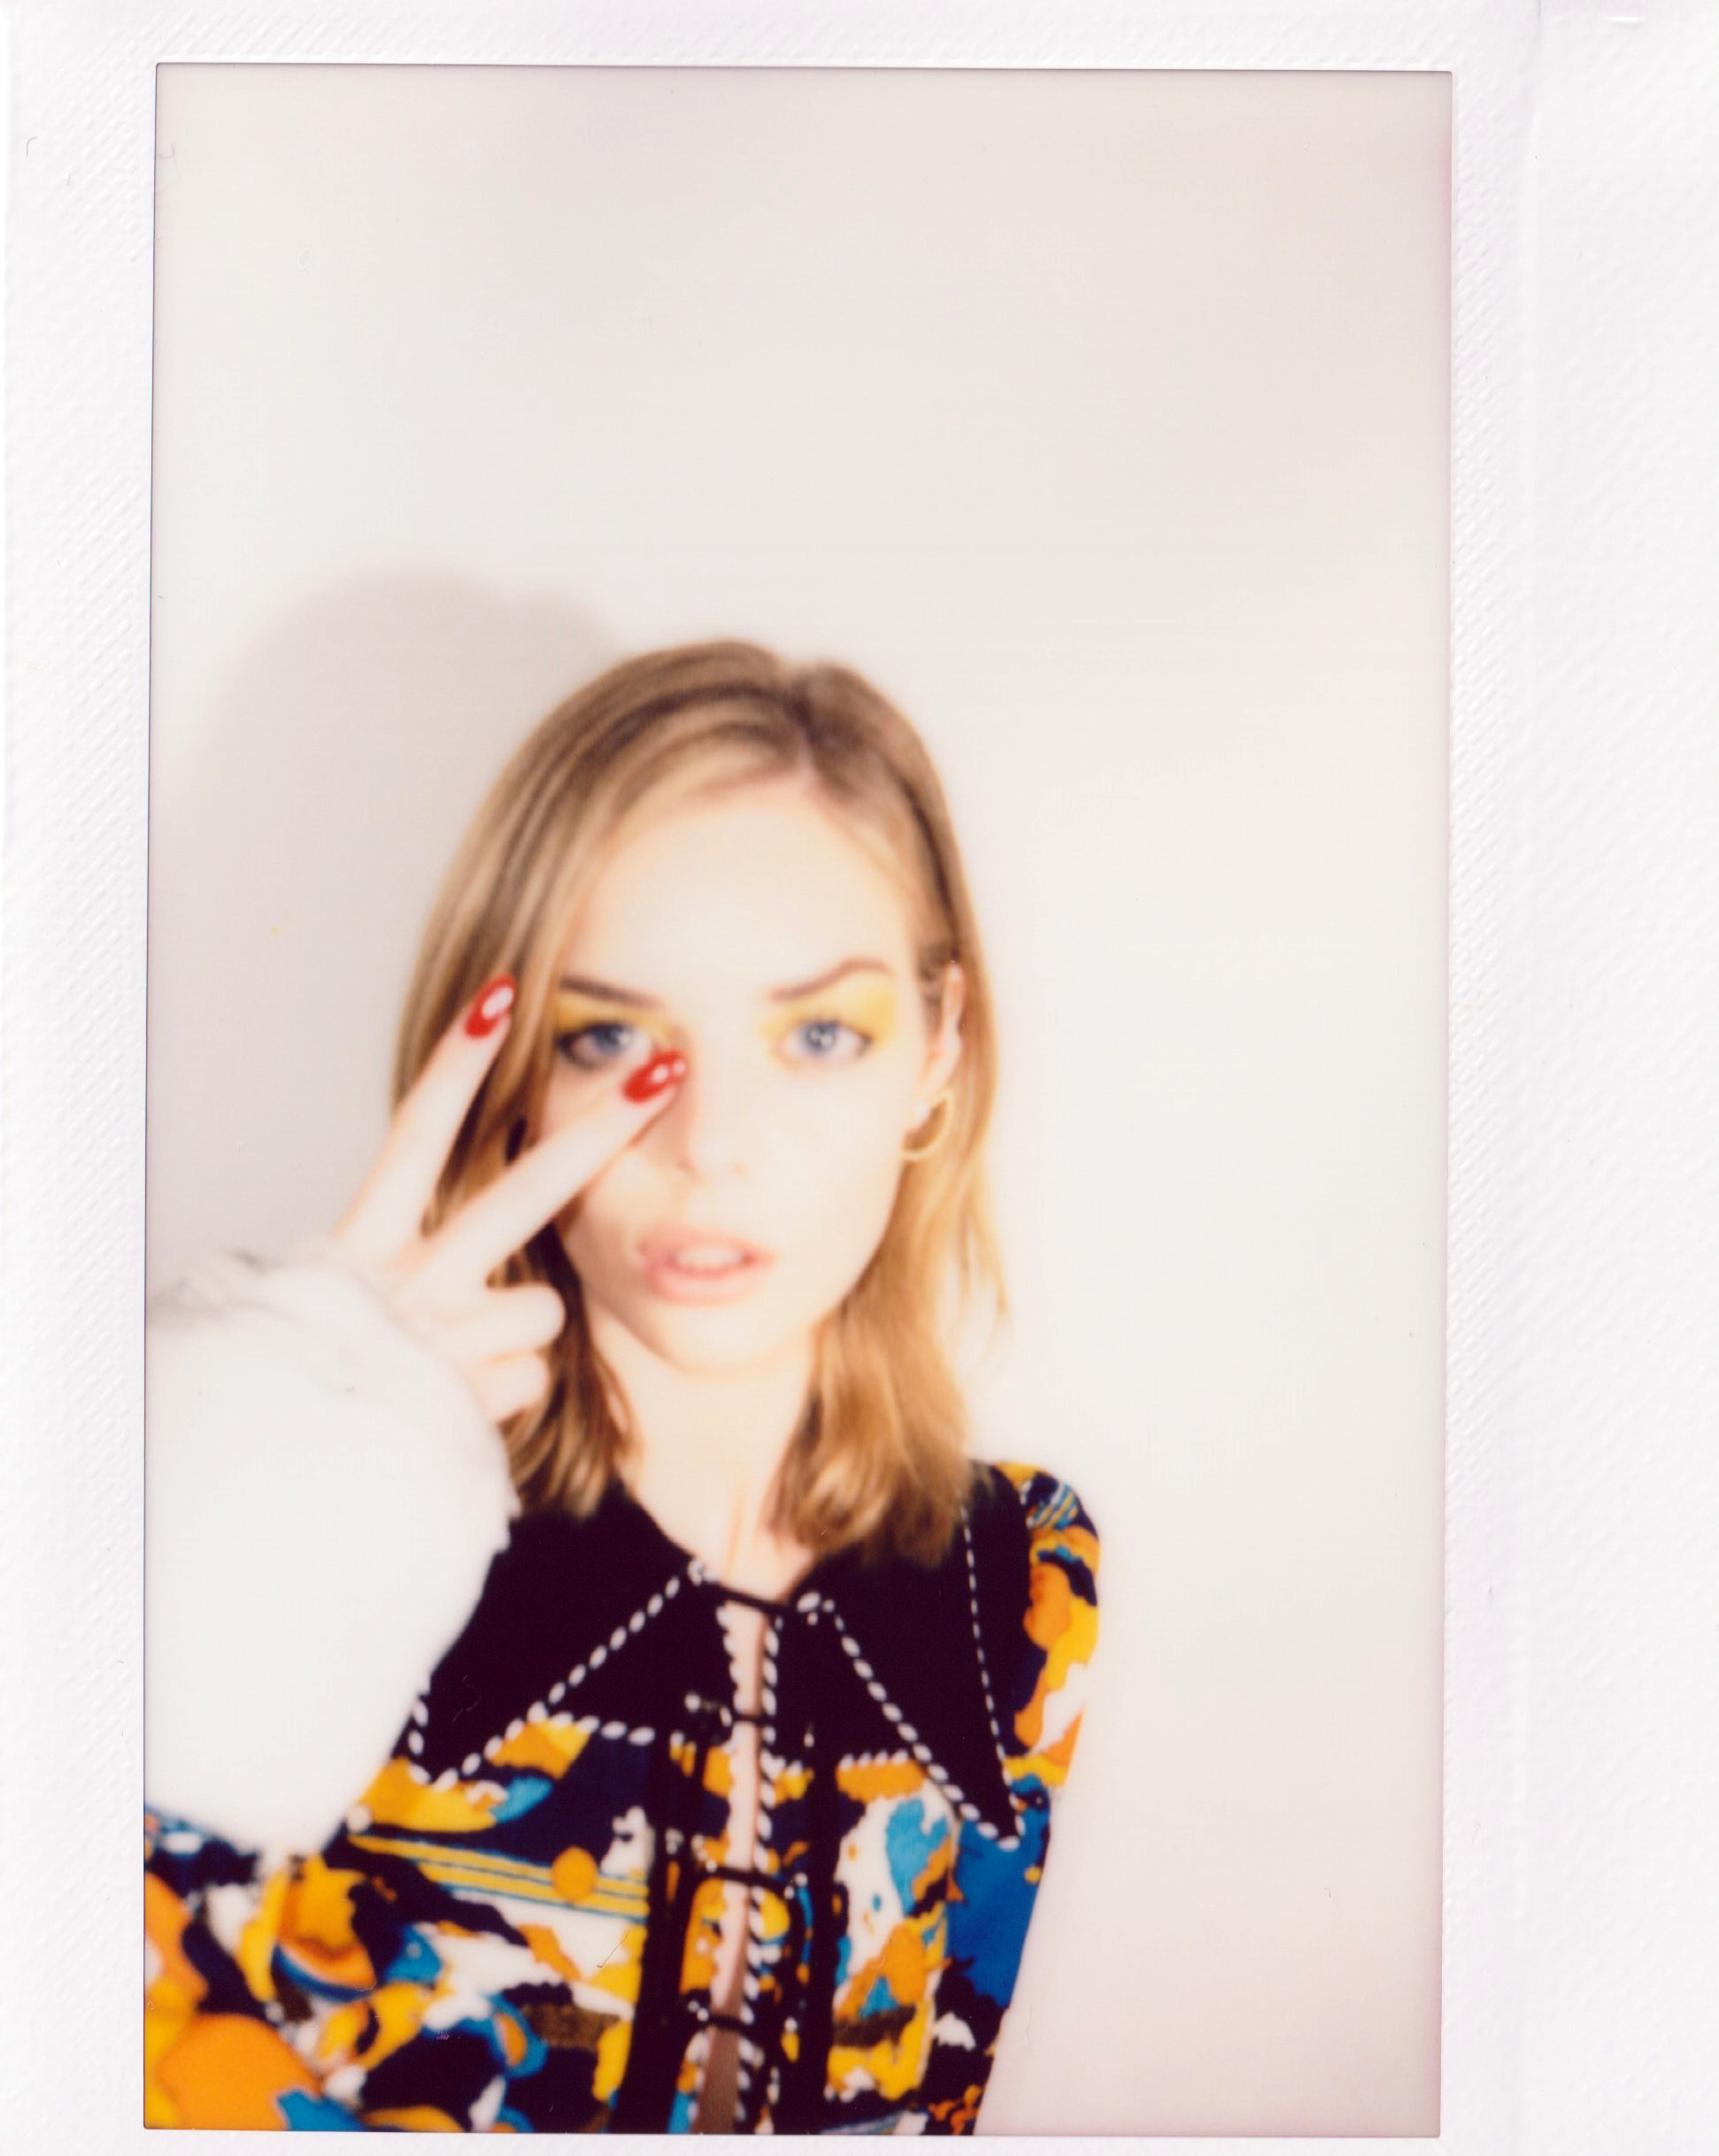 Photos n°5 : Samara Weaving Polaroids!